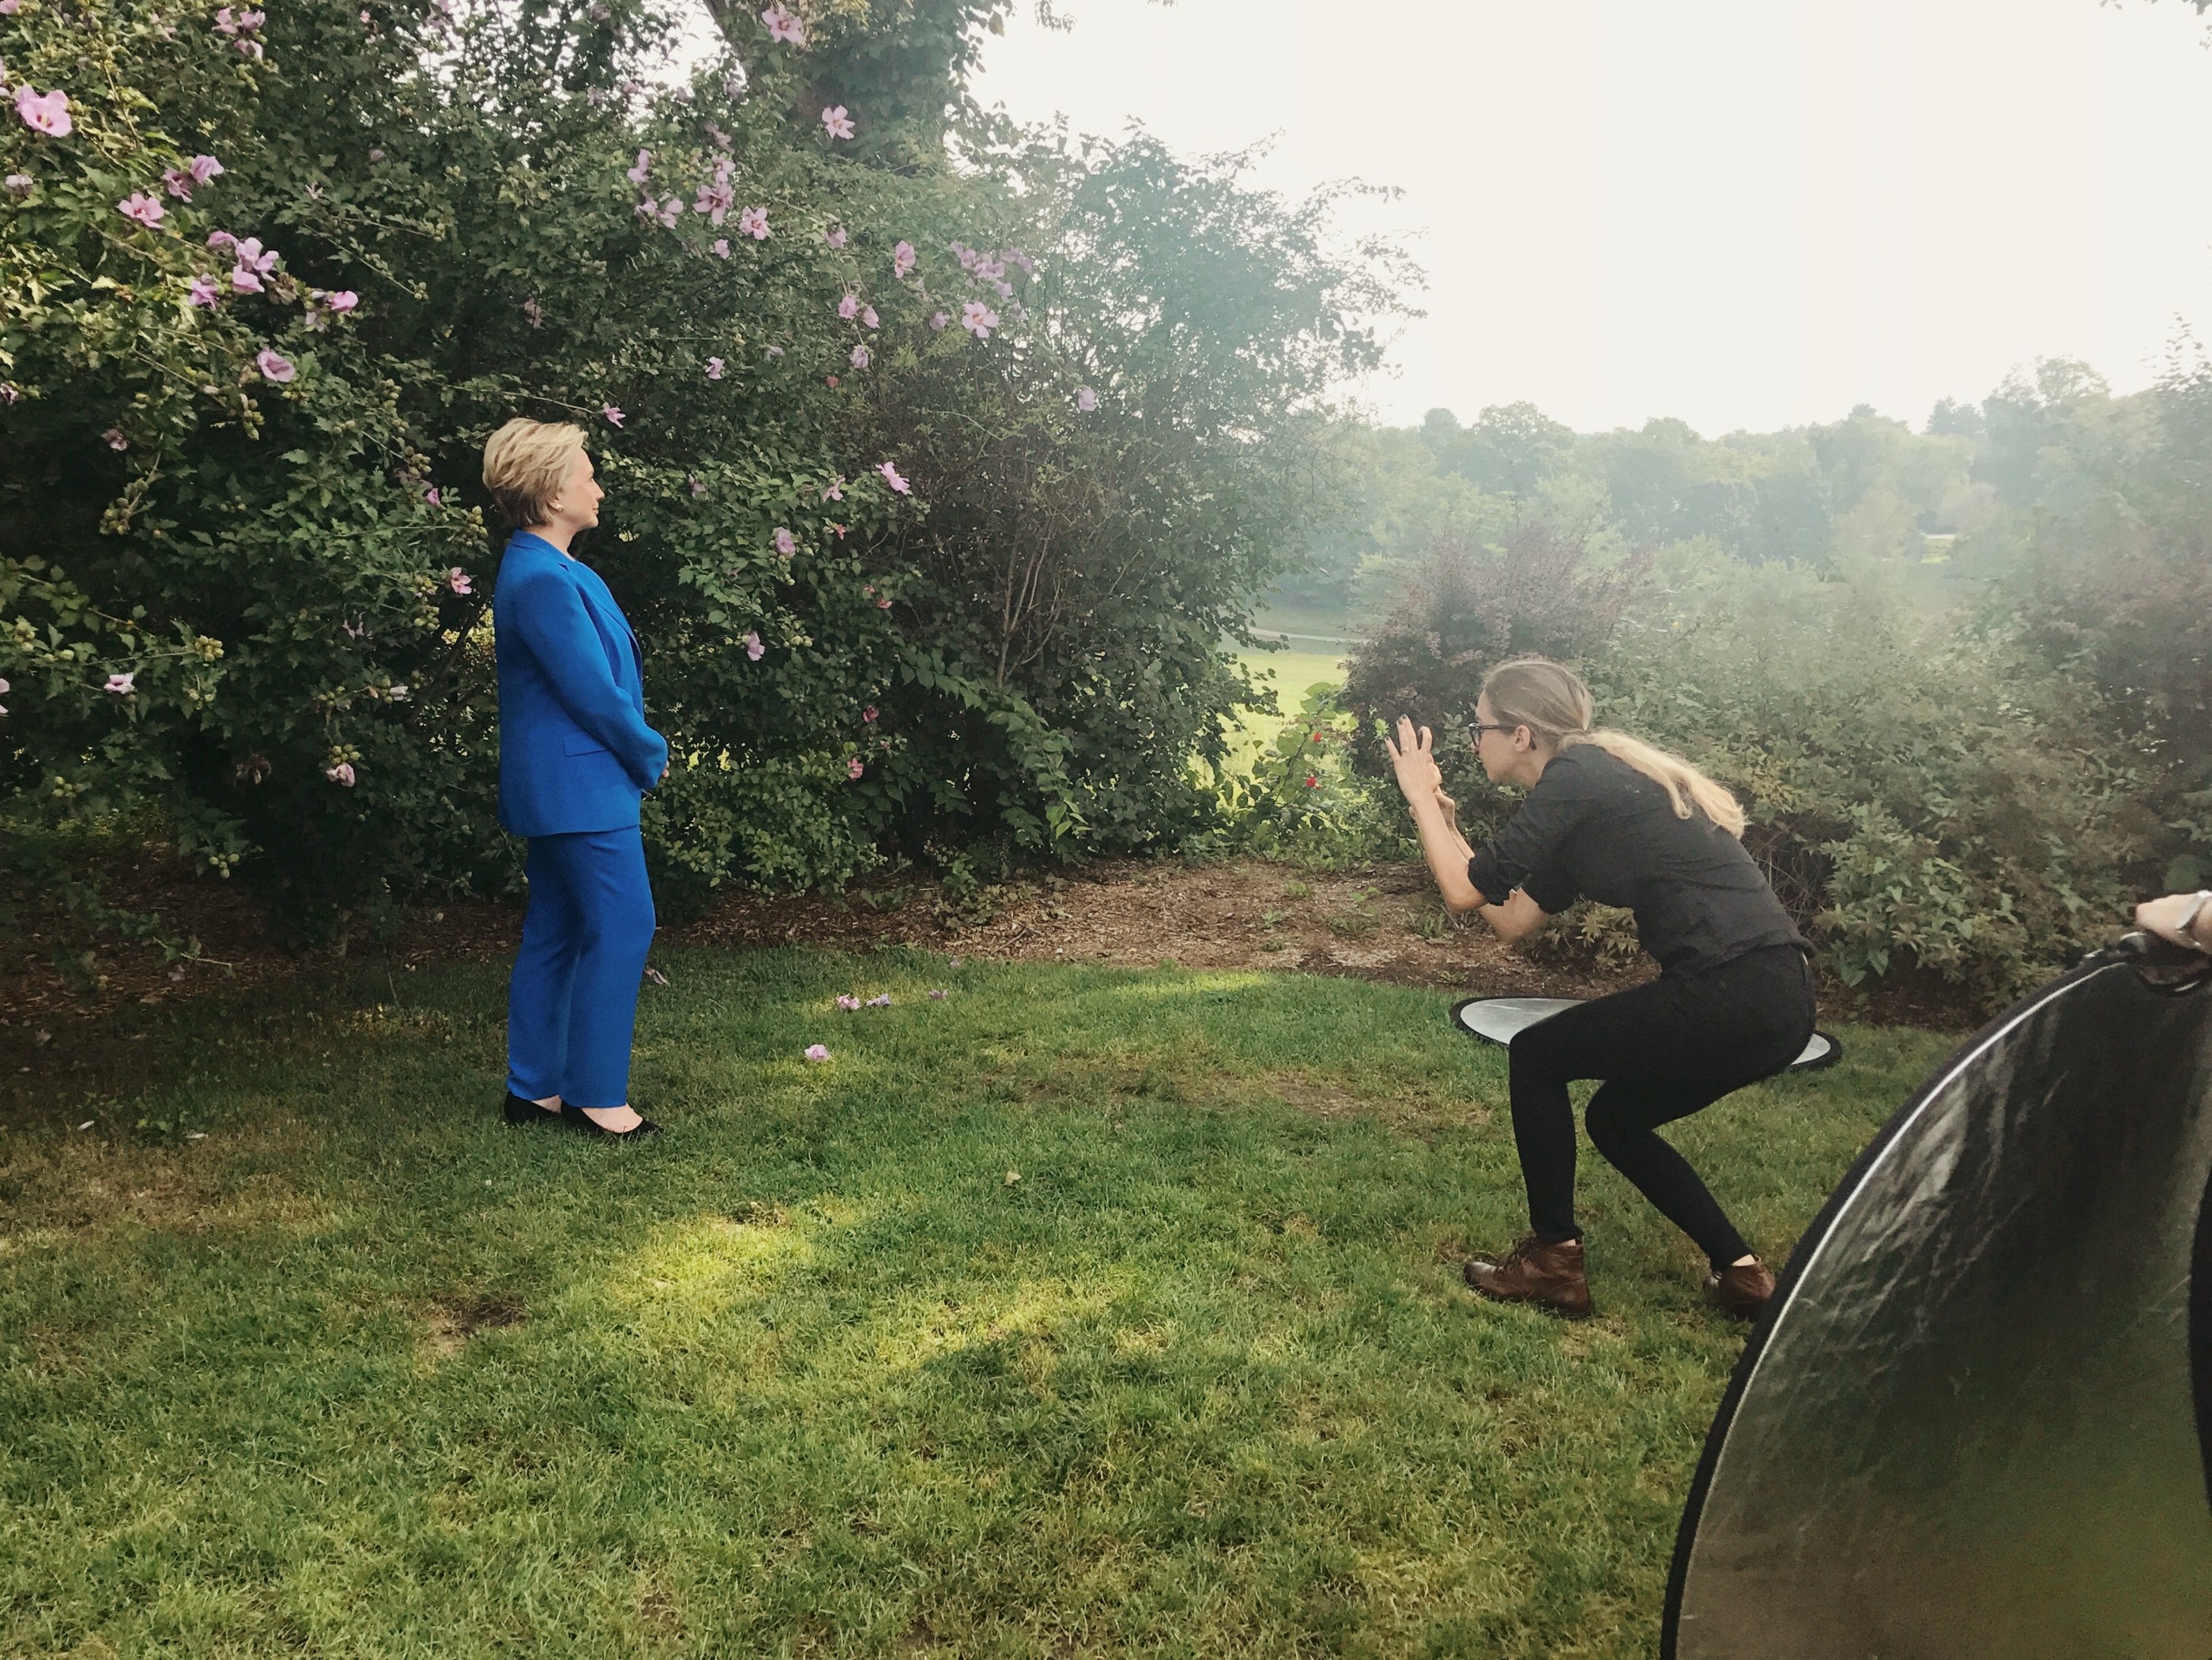 Luisa Dörr, right, photographs secretary Hillary Rodham Clinton, in Chappaqua, New York on Sept. 5, 2017.